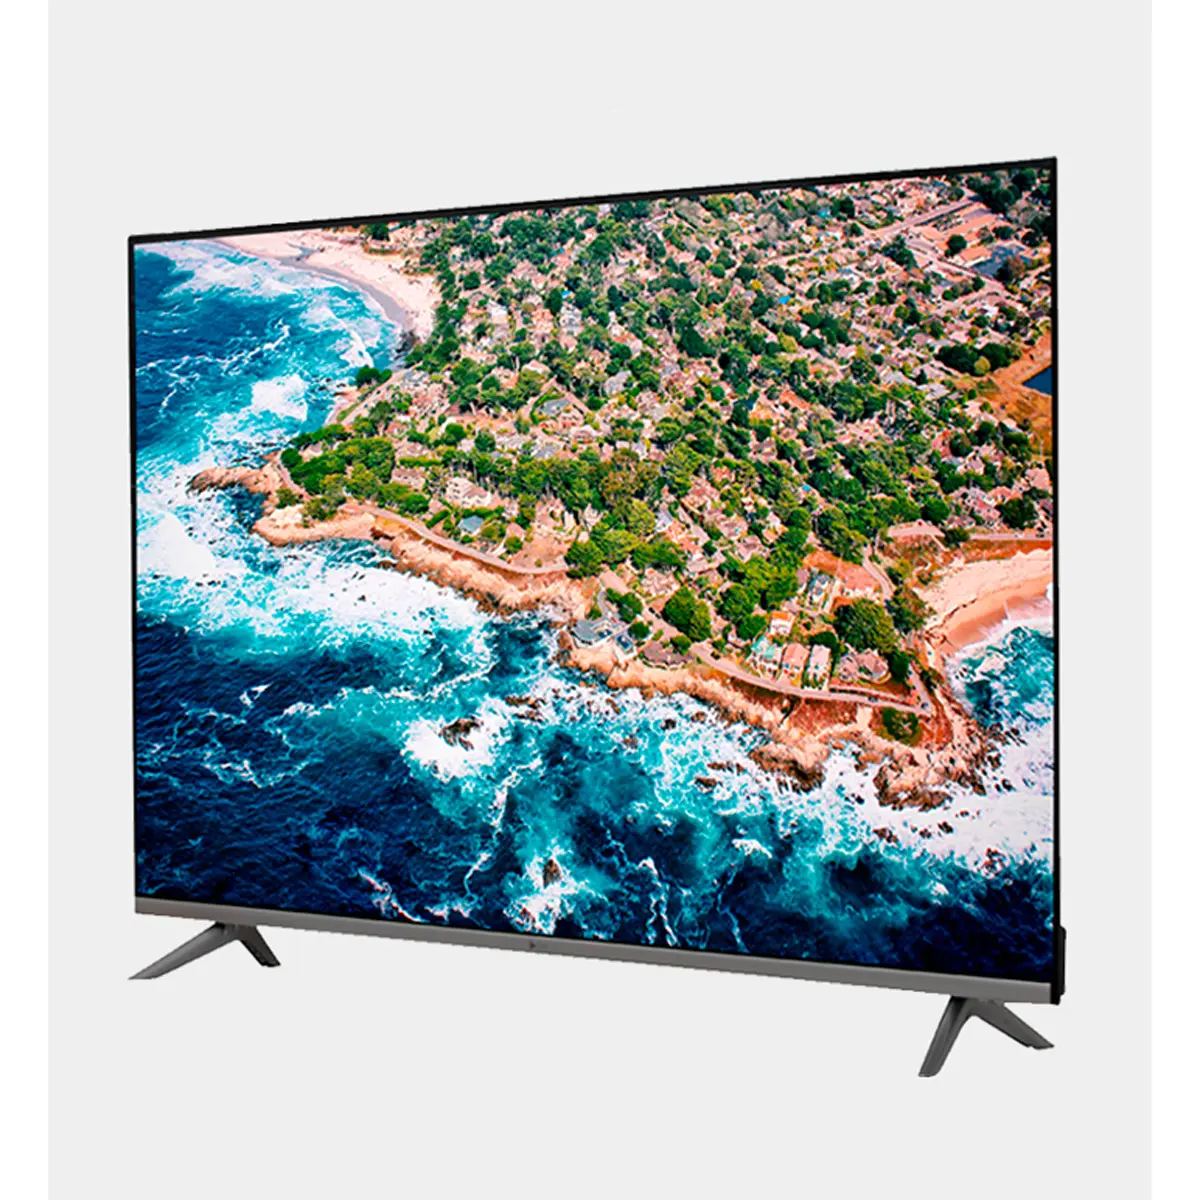 Ultra-thin Led Smart TV 43 inch Dolby Digital Brightness 350 cd/m2 sharp image wholesale